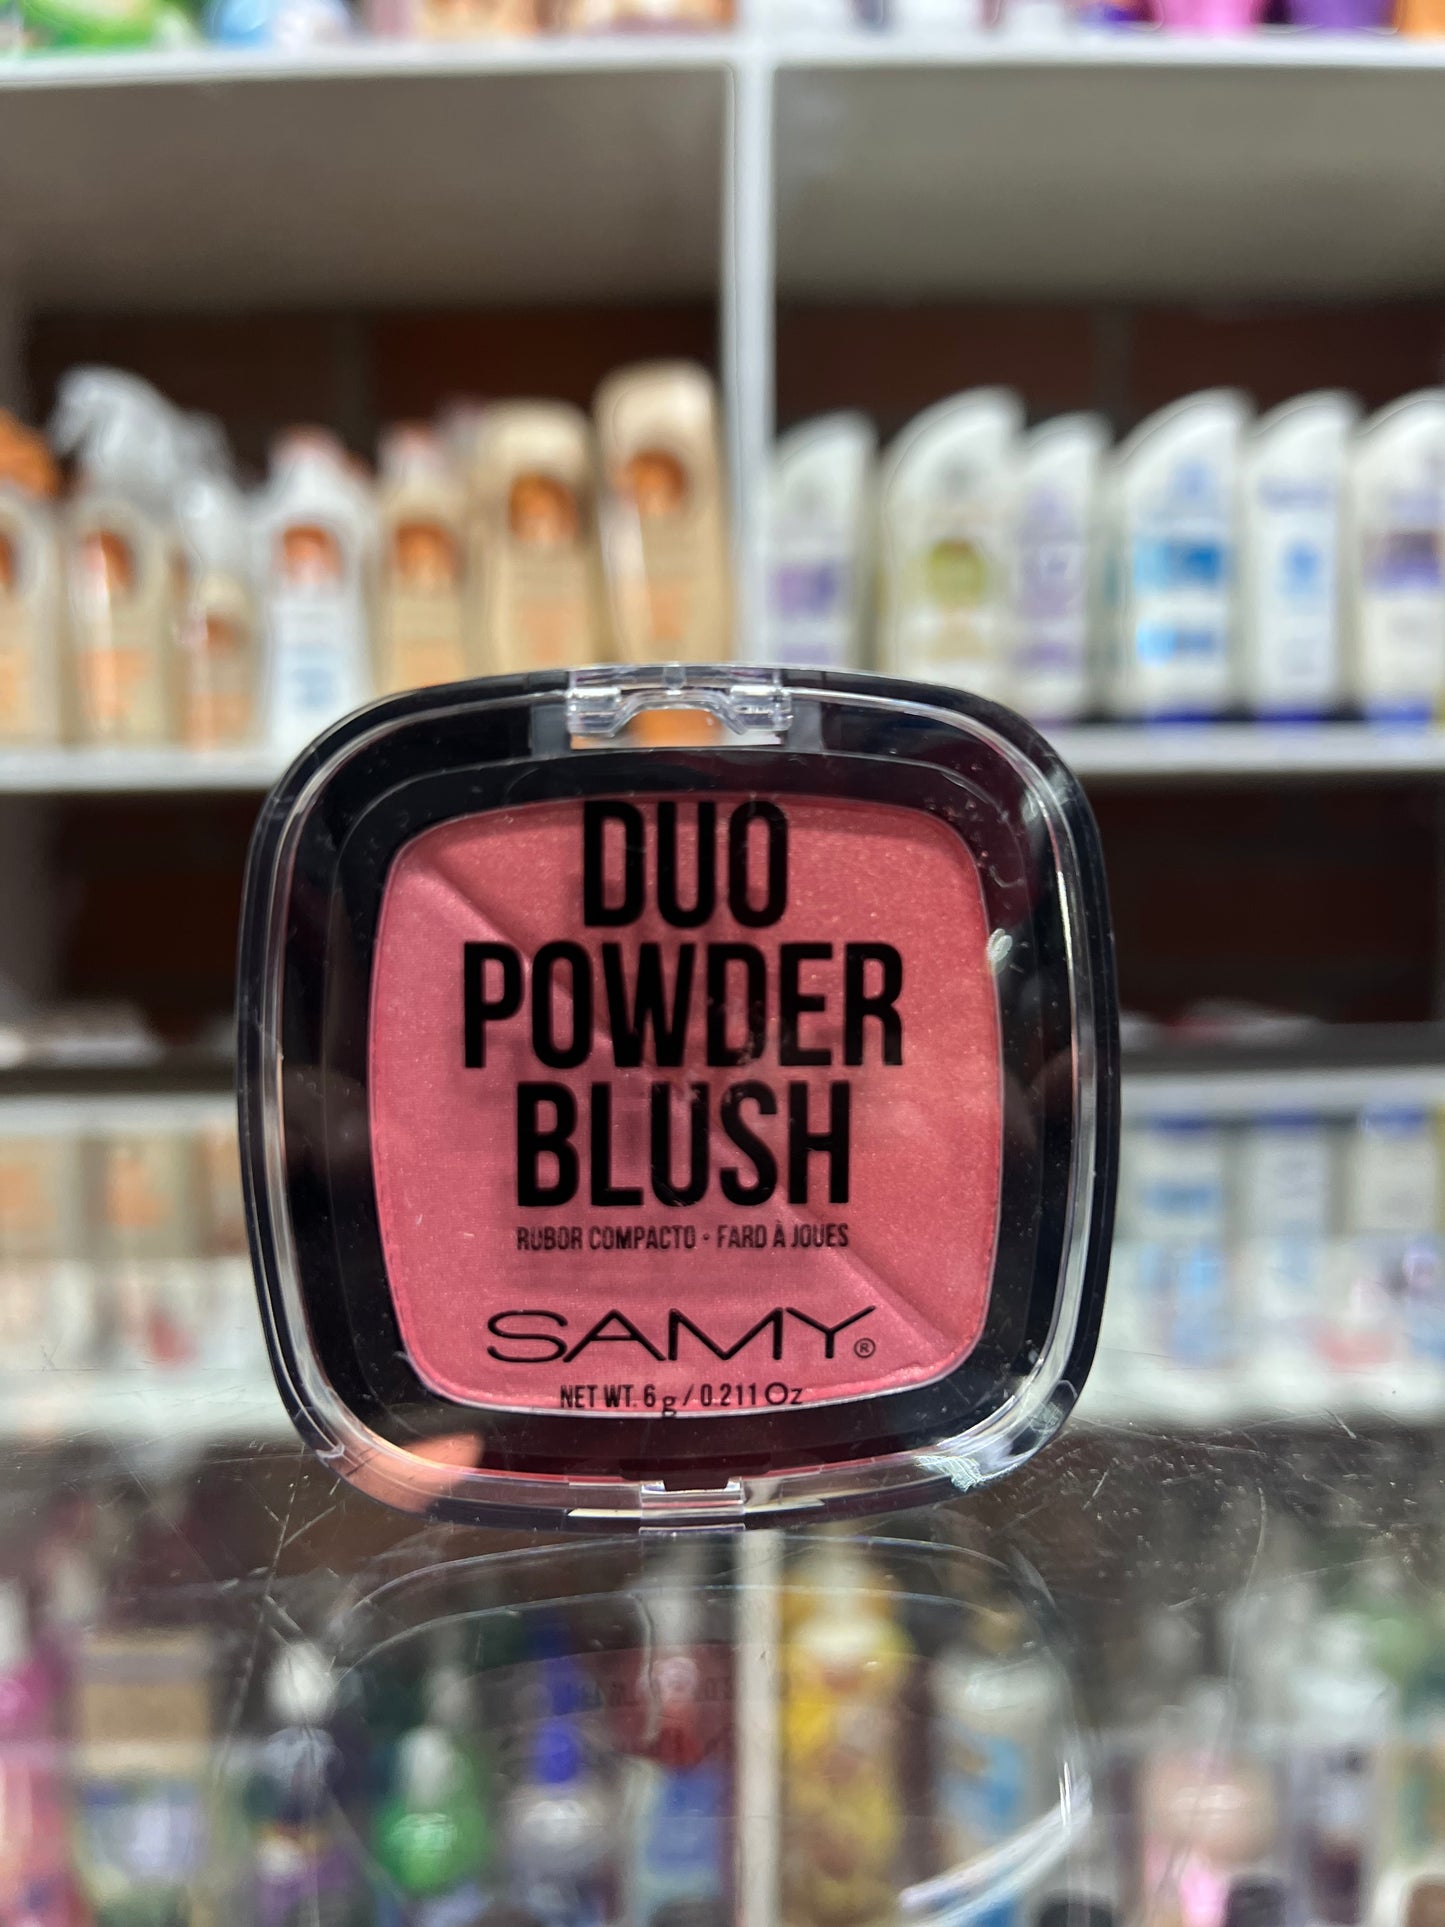 Rubor compacto duo powder blush samy